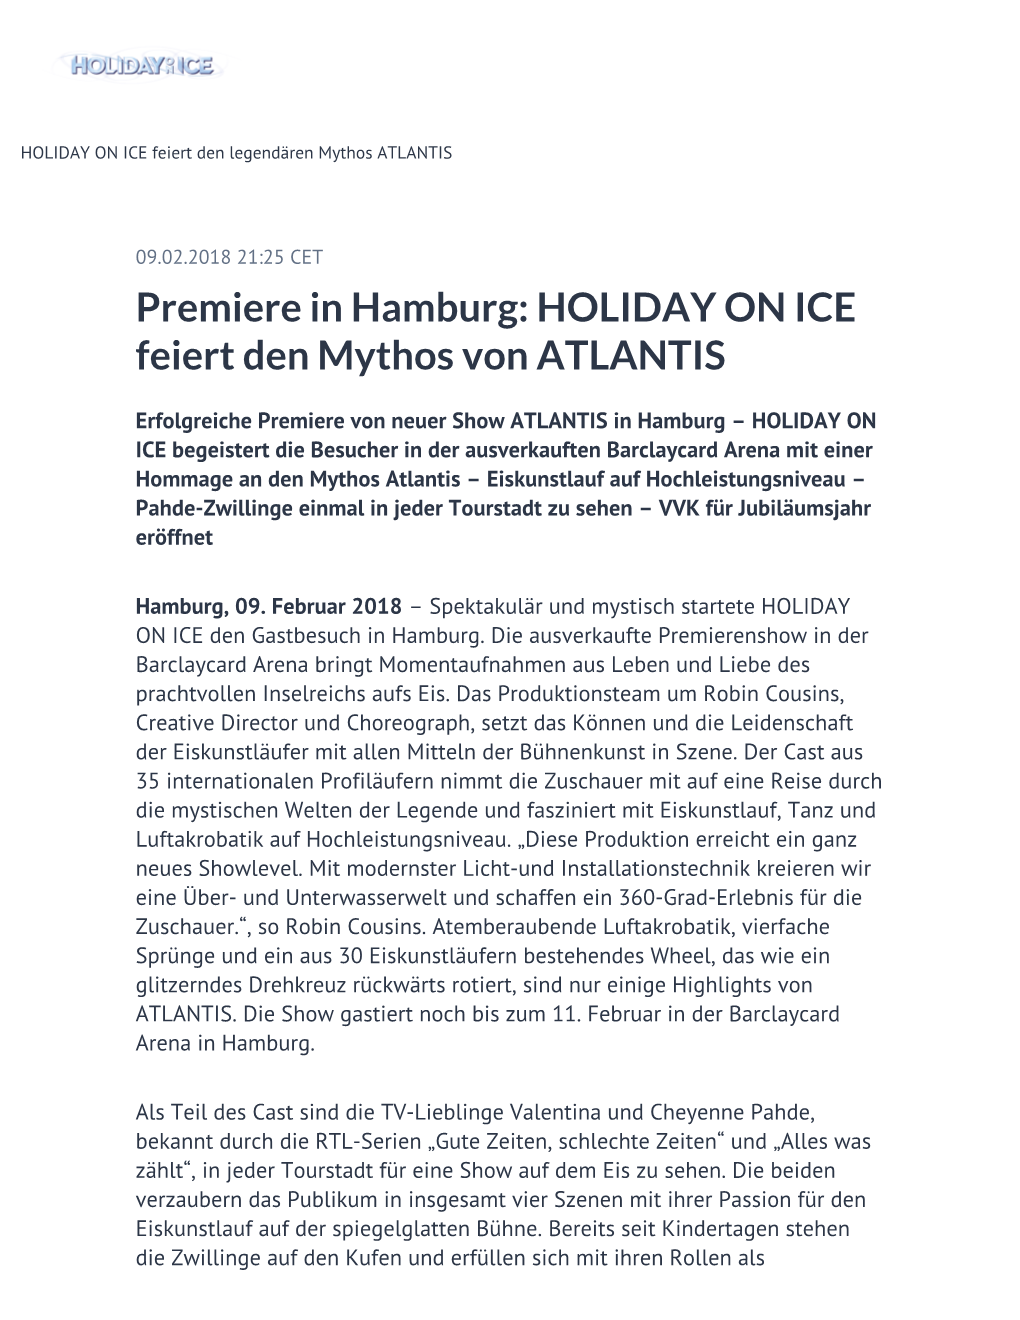 Premiere in Hamburg: HOLIDAY on ICE Feiert Den Mythos Von ATLANTIS